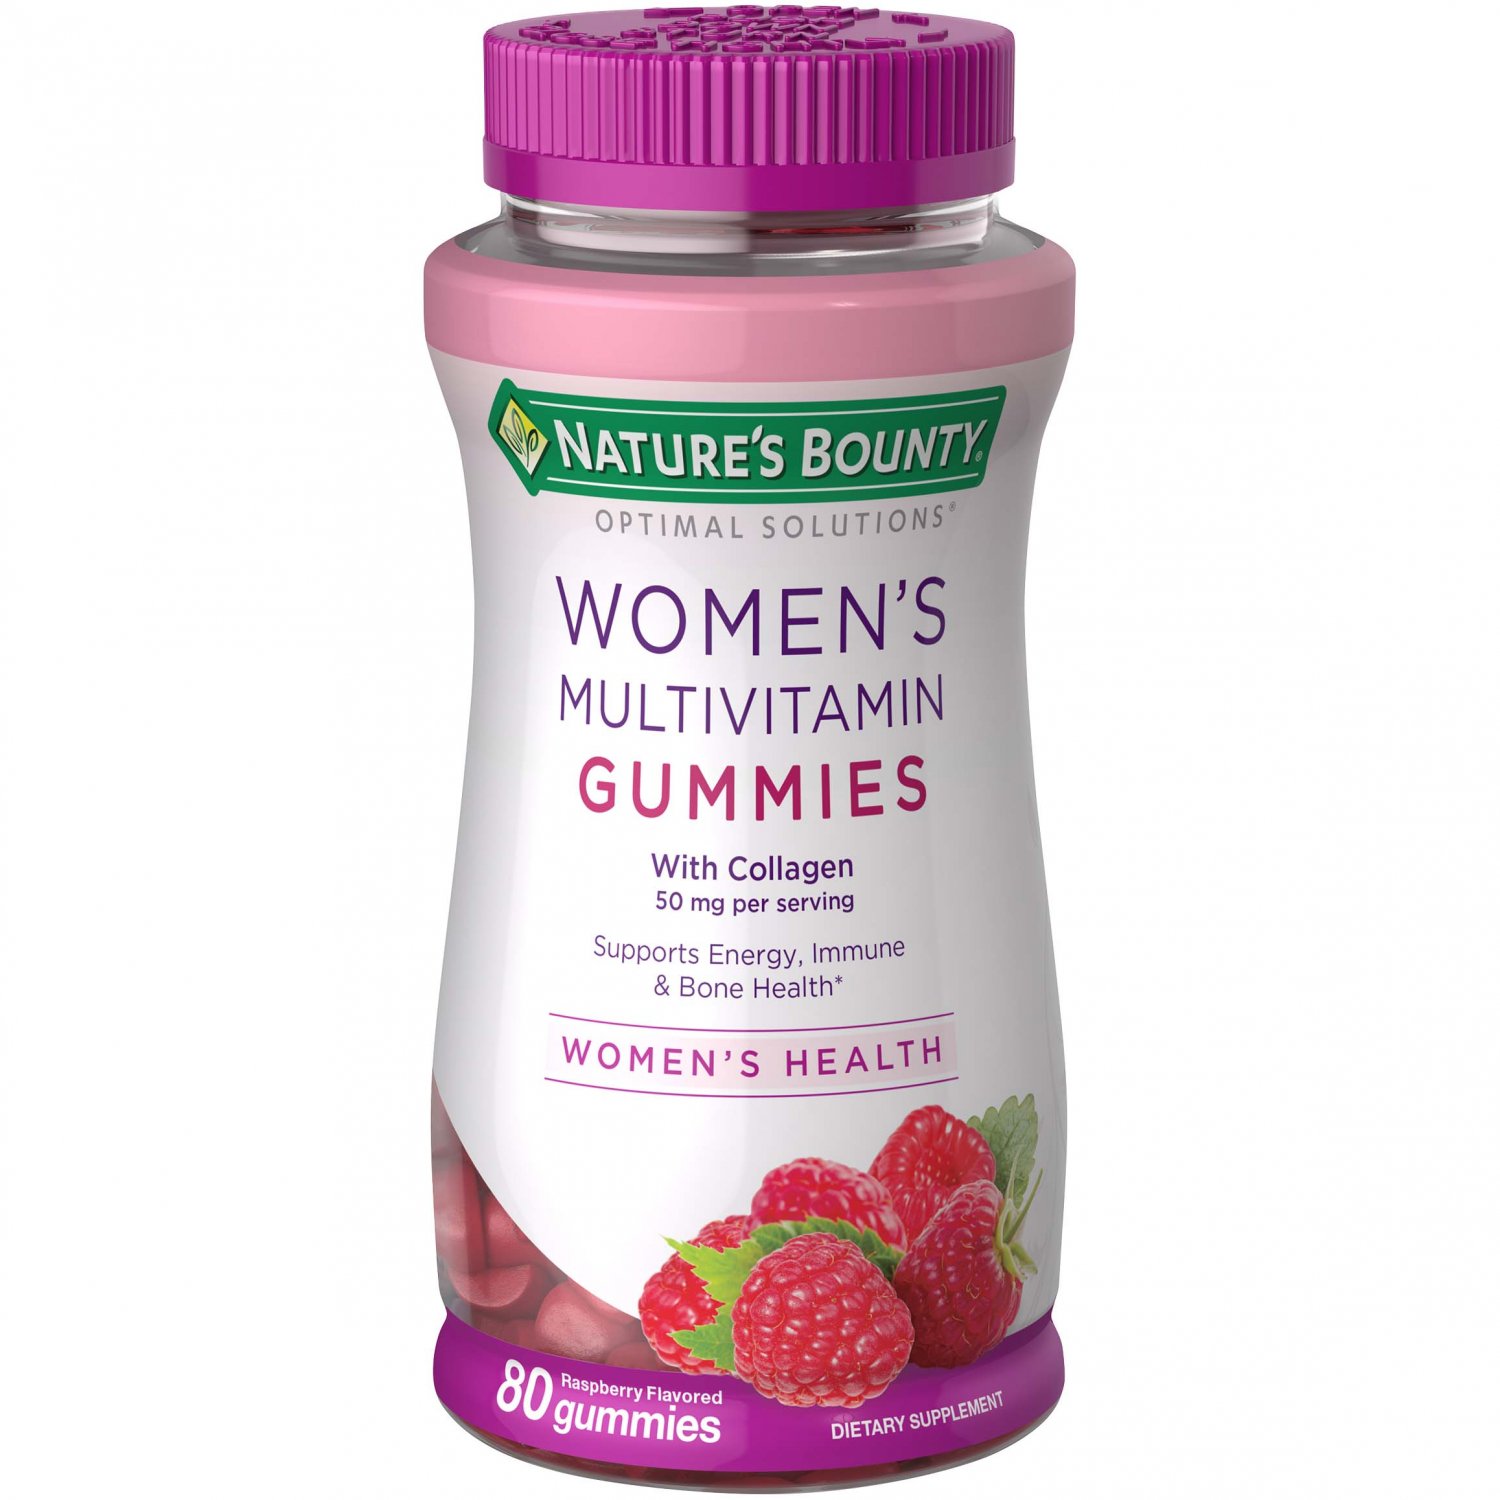 Nature's Bounty Optimal Solutions Women's Multivitamin Gummy Vitamins 80 Gummies